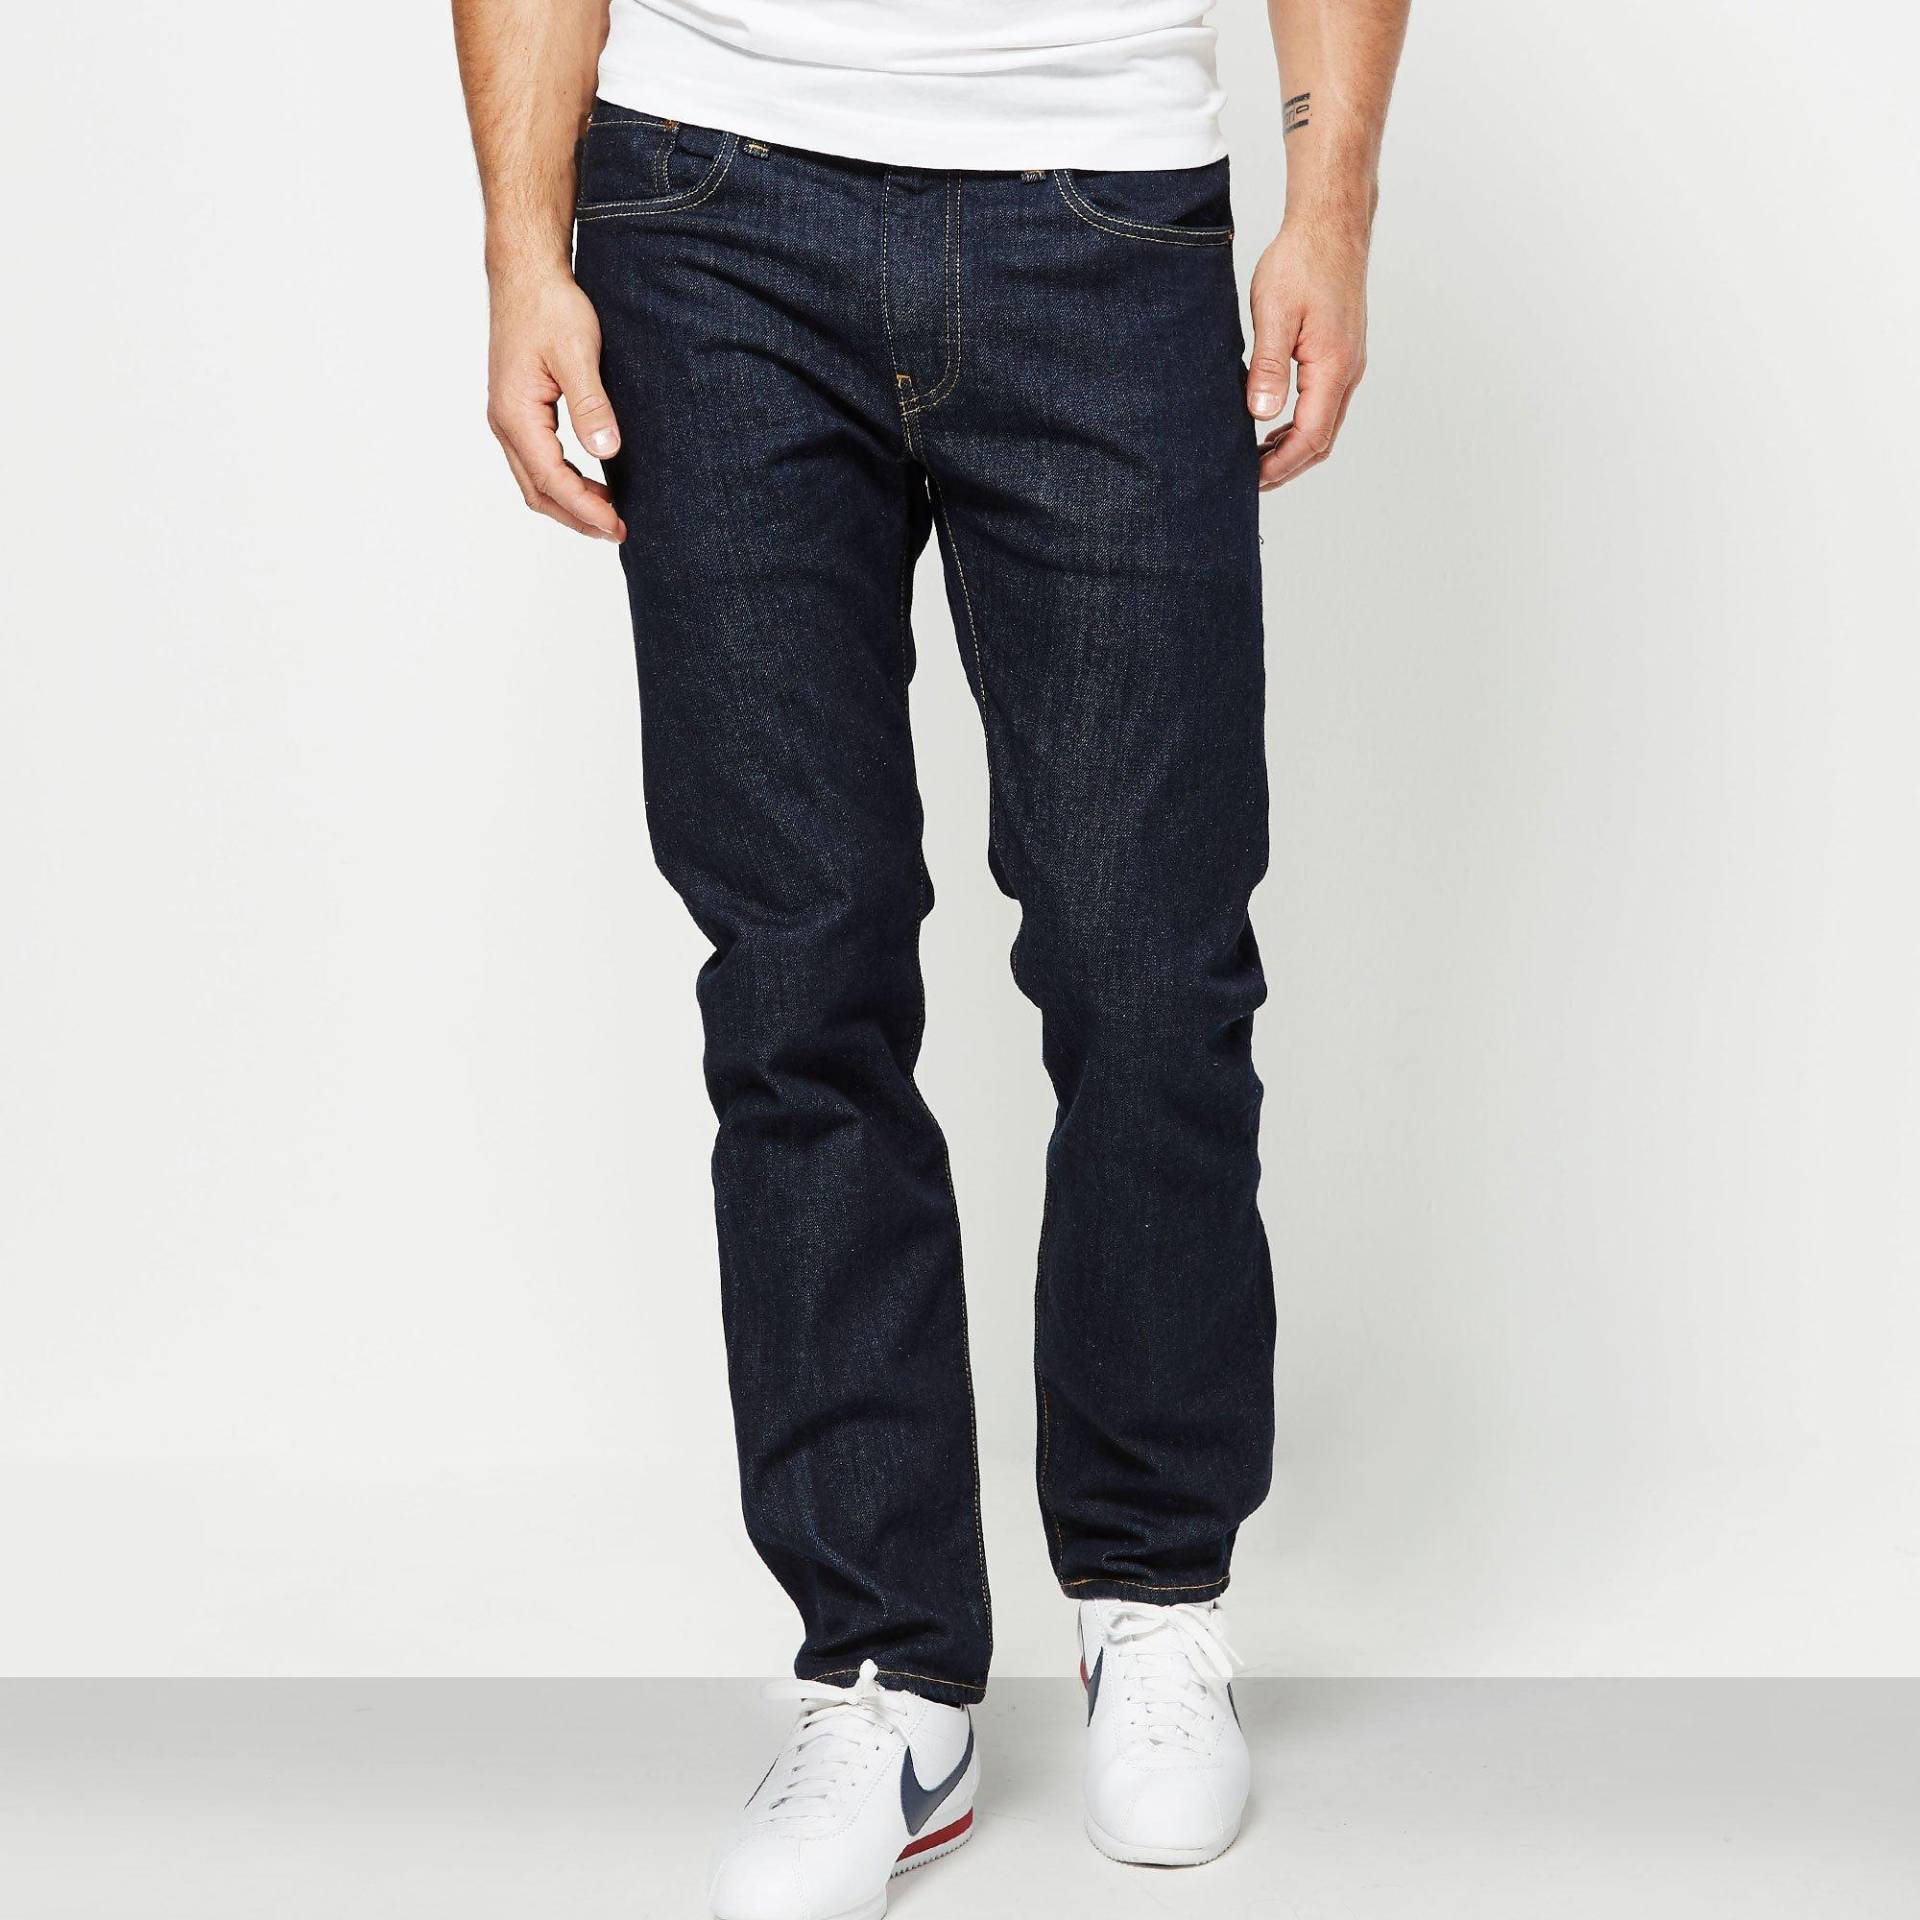 Jeans, Straight Leg Fit Herren Blau Denim Dunkel L30/W33 von Levi's®